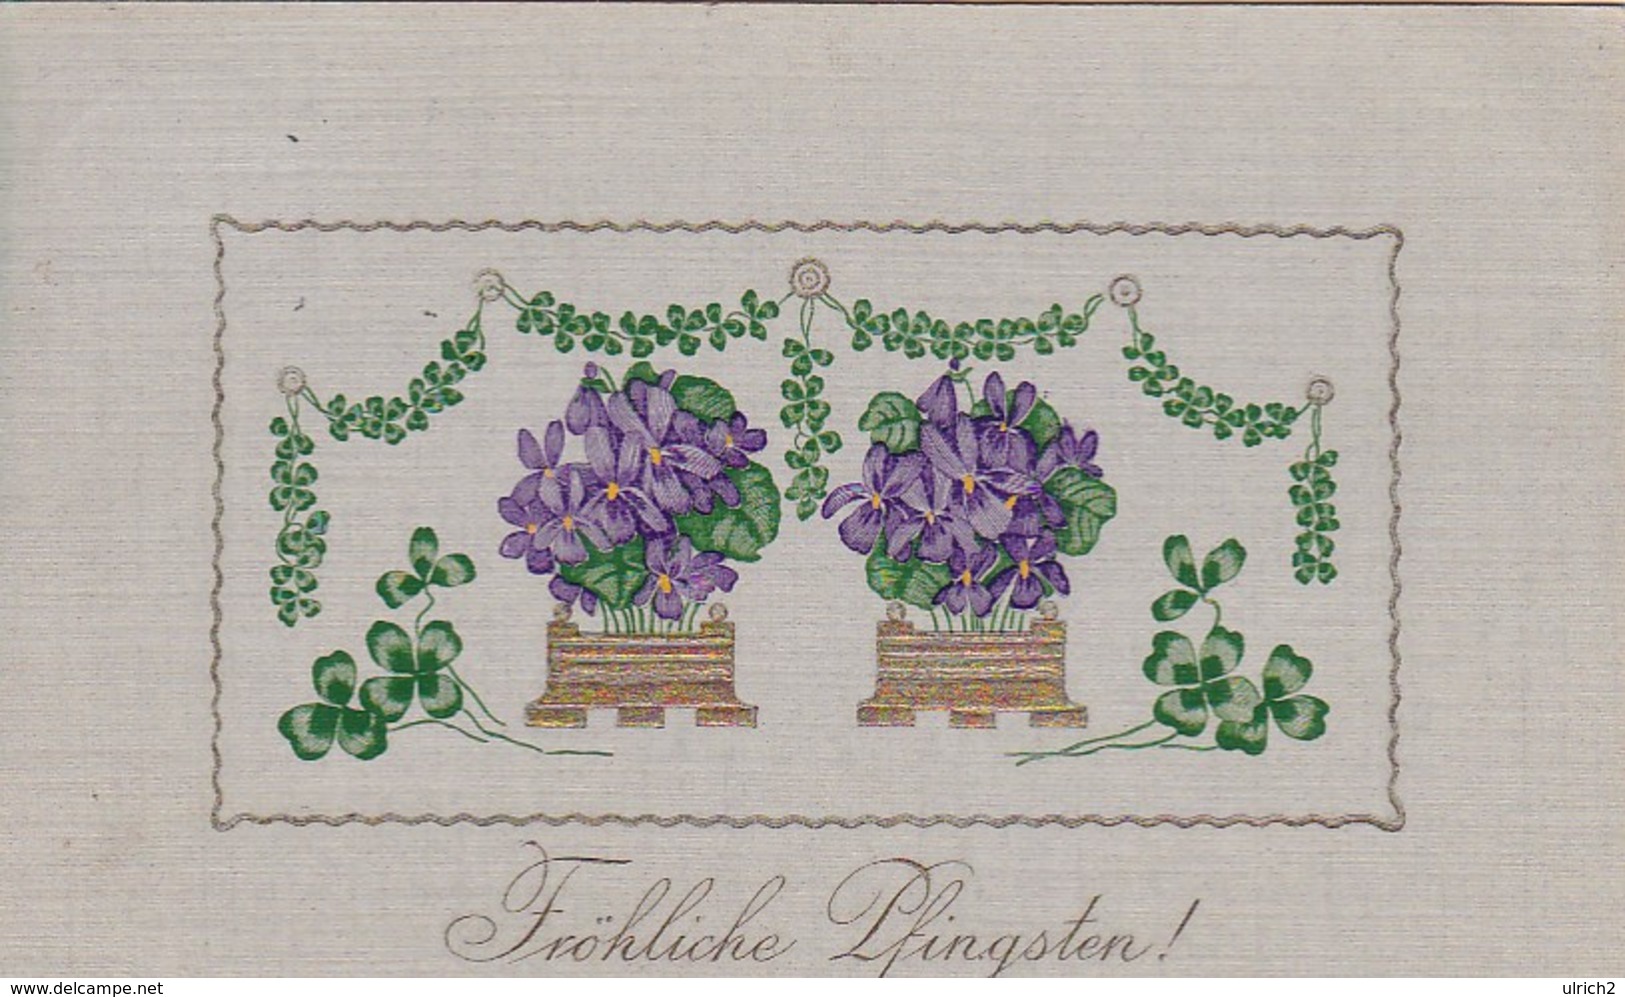 AK Fröhliche Pfingsten - Klee Blumen - Golddruck Reliefdruck - 1900 (49063) - Pinksteren